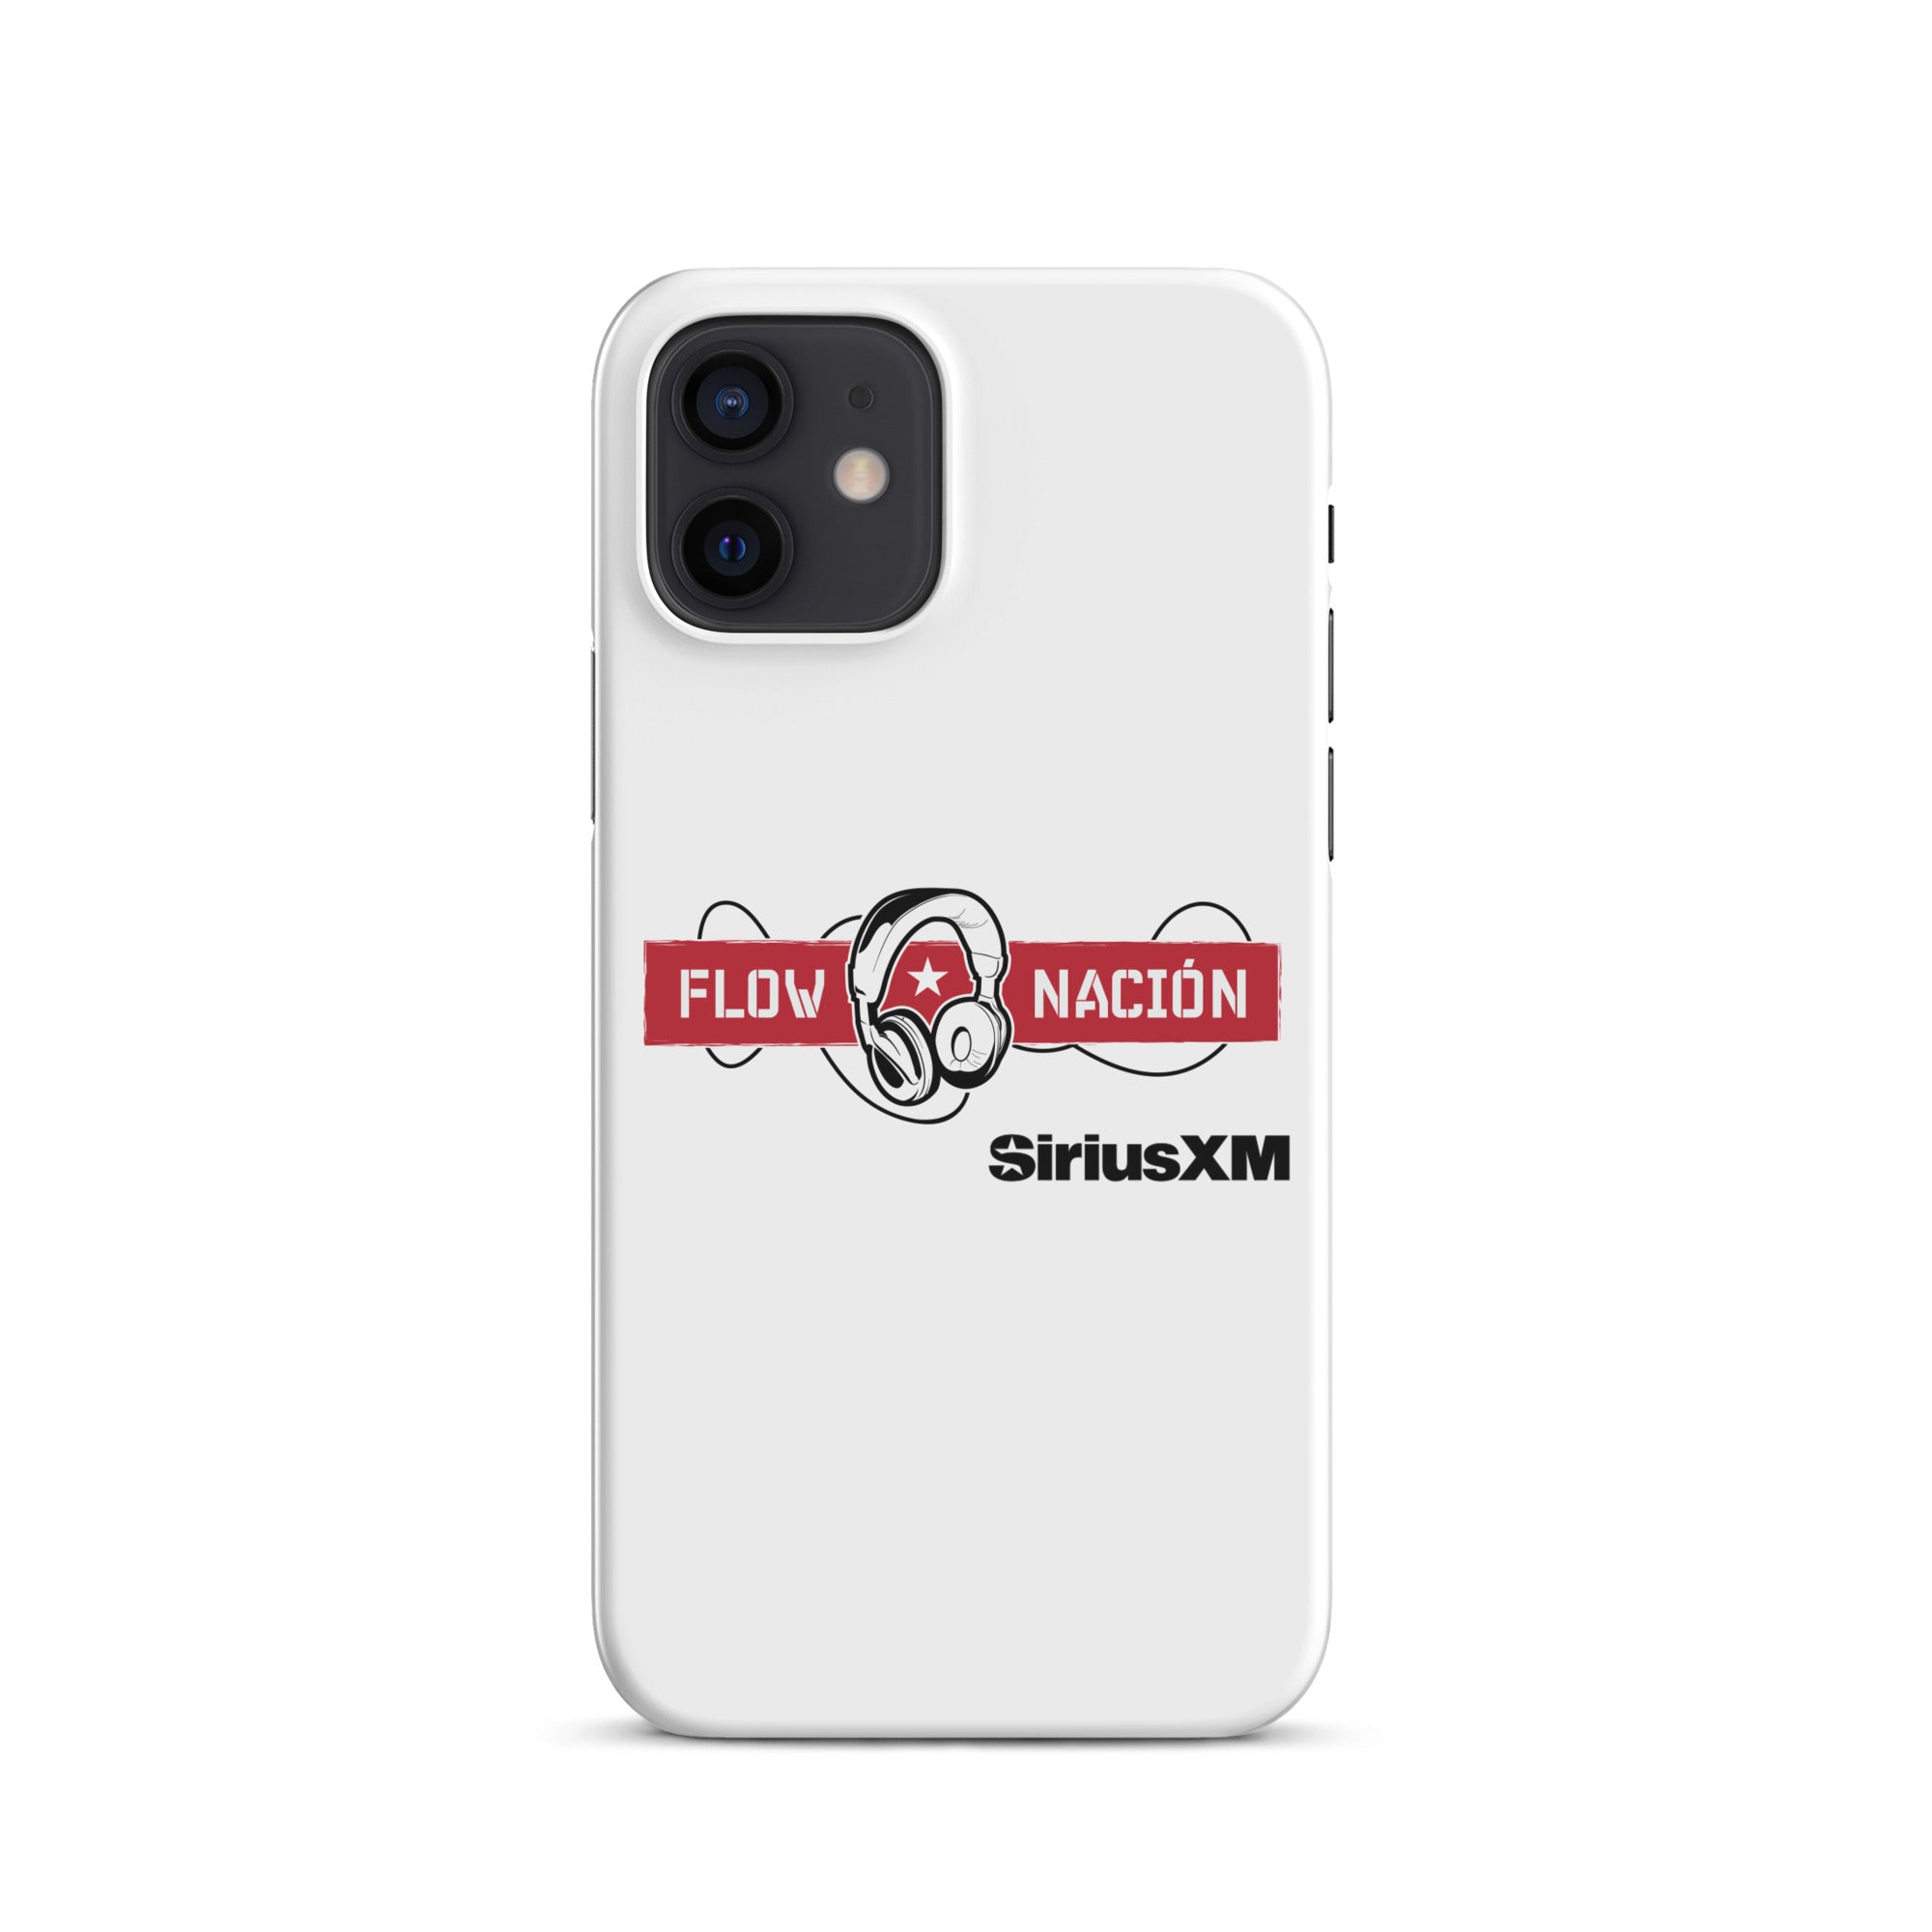 Flow Nacion: iPhone® Snap Case